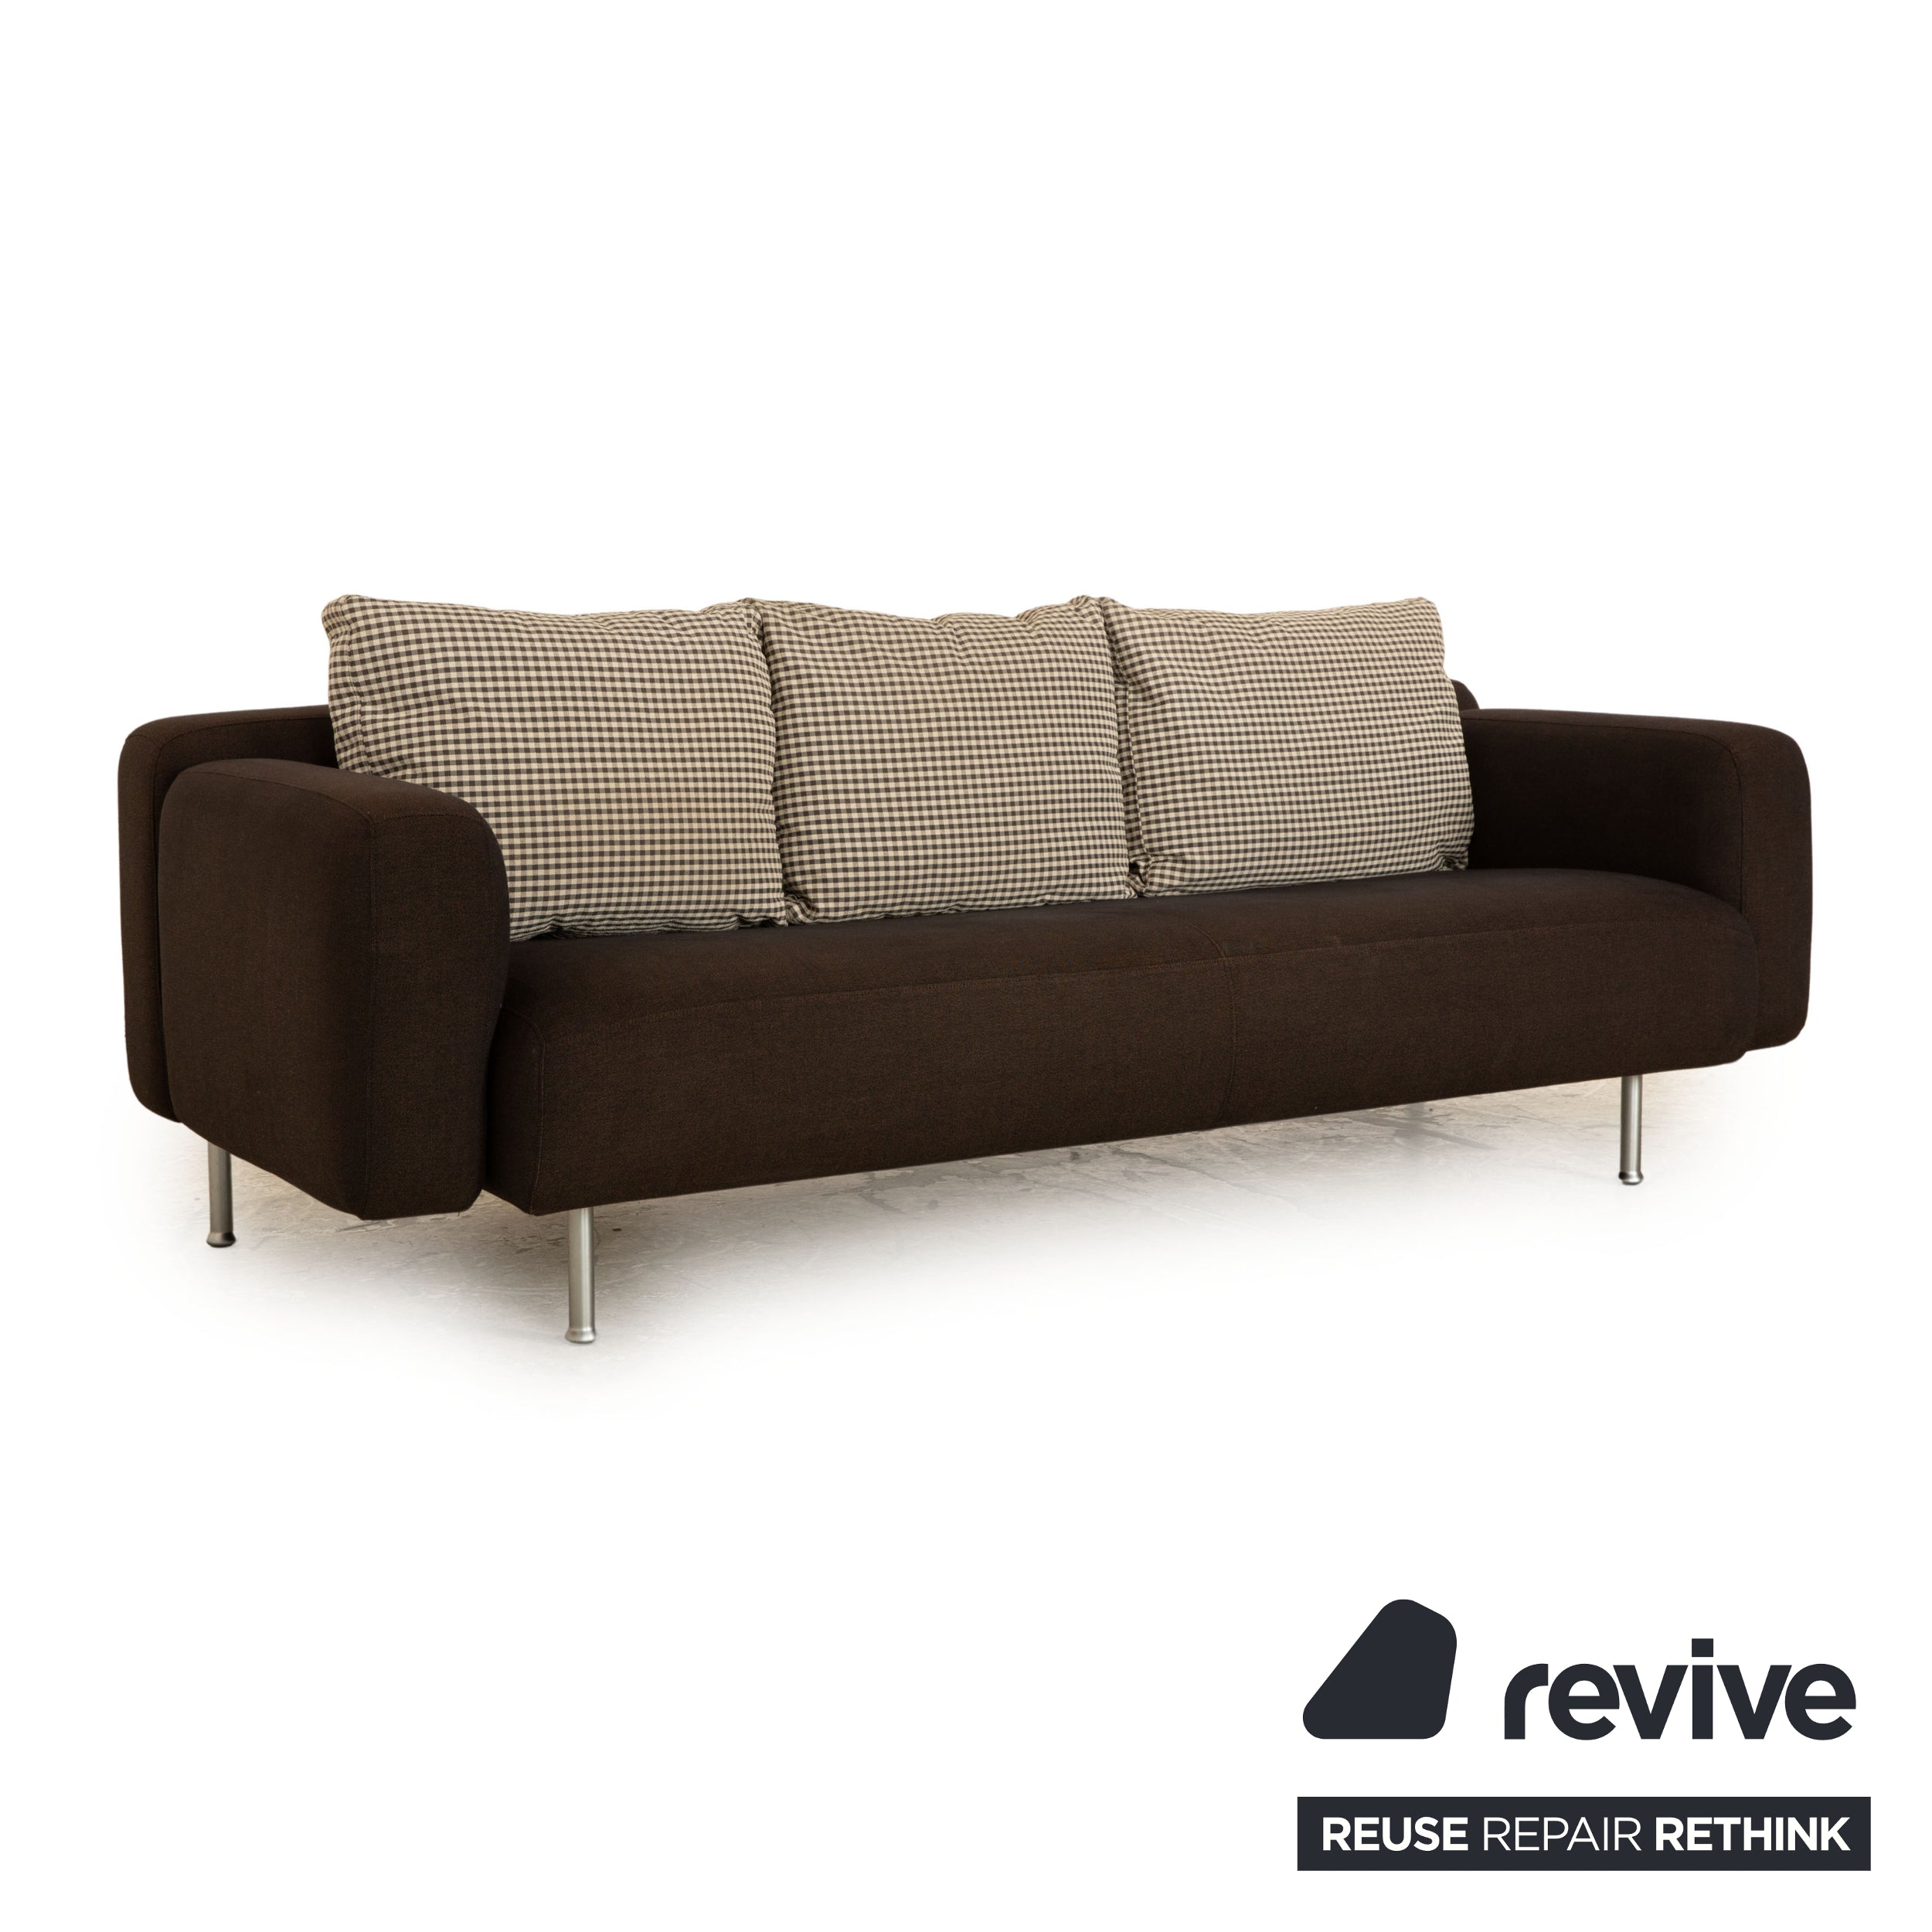 ligne roset fabric three-seater dark brown sofa couch